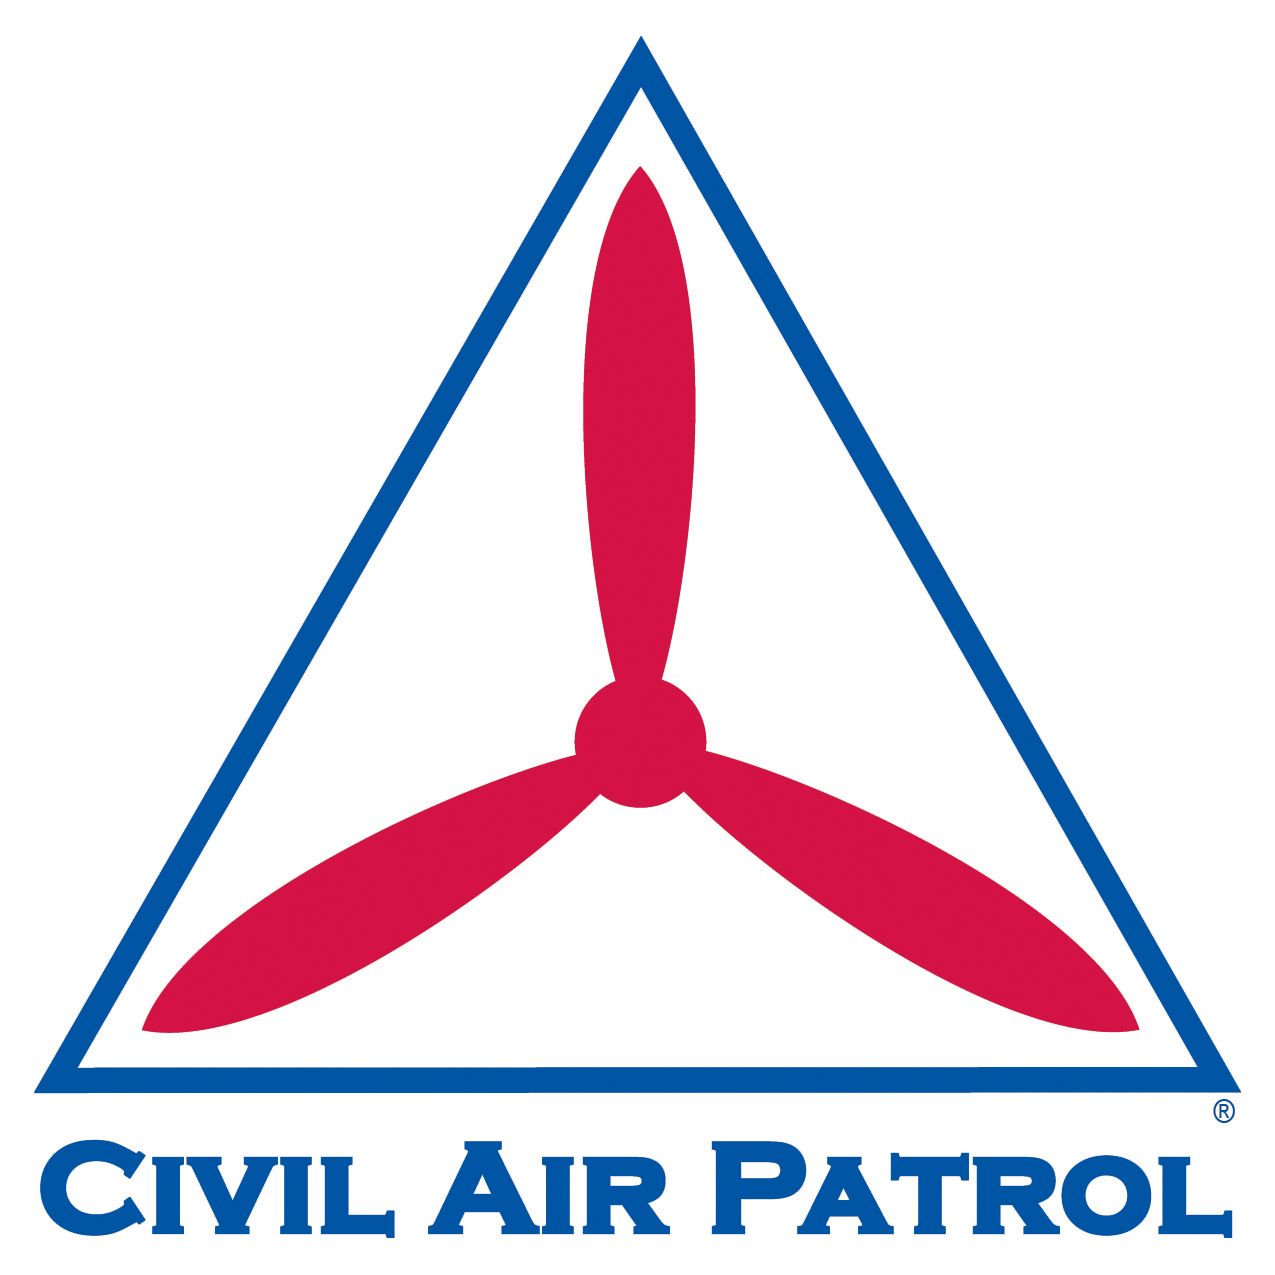 What is the Civil Air Patrol?